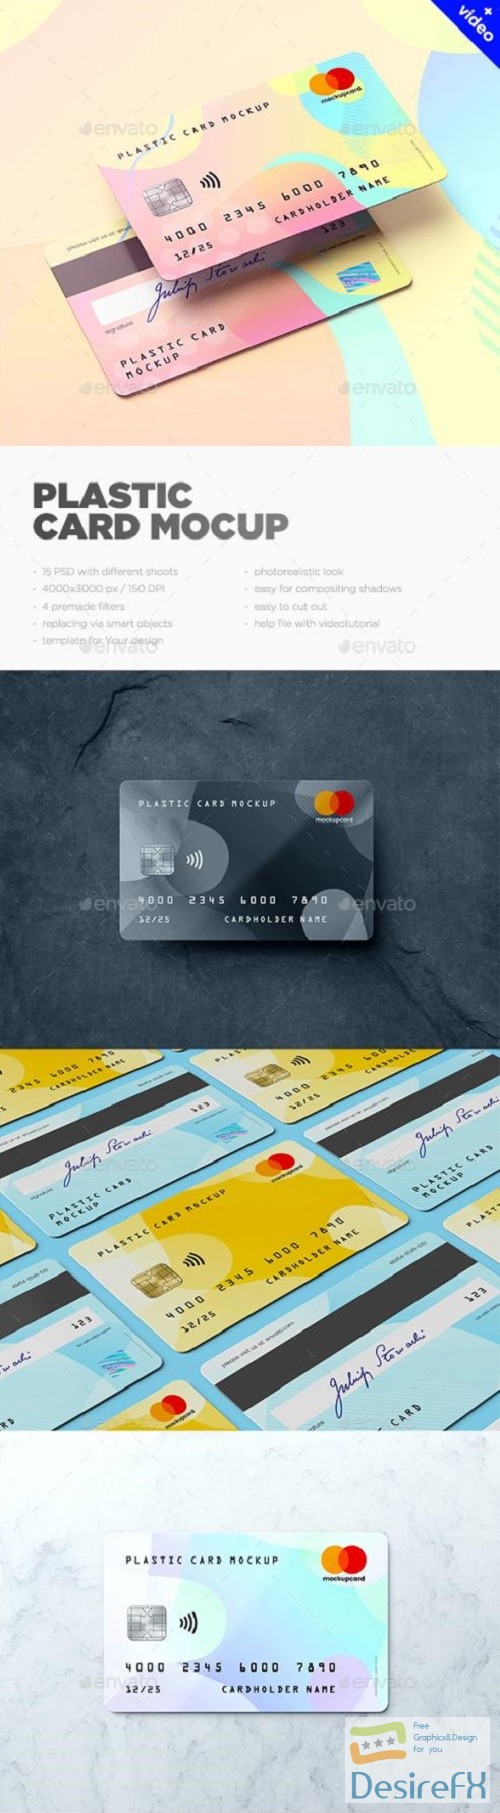 Plastic Card / Bank Card MockUp - 22352639